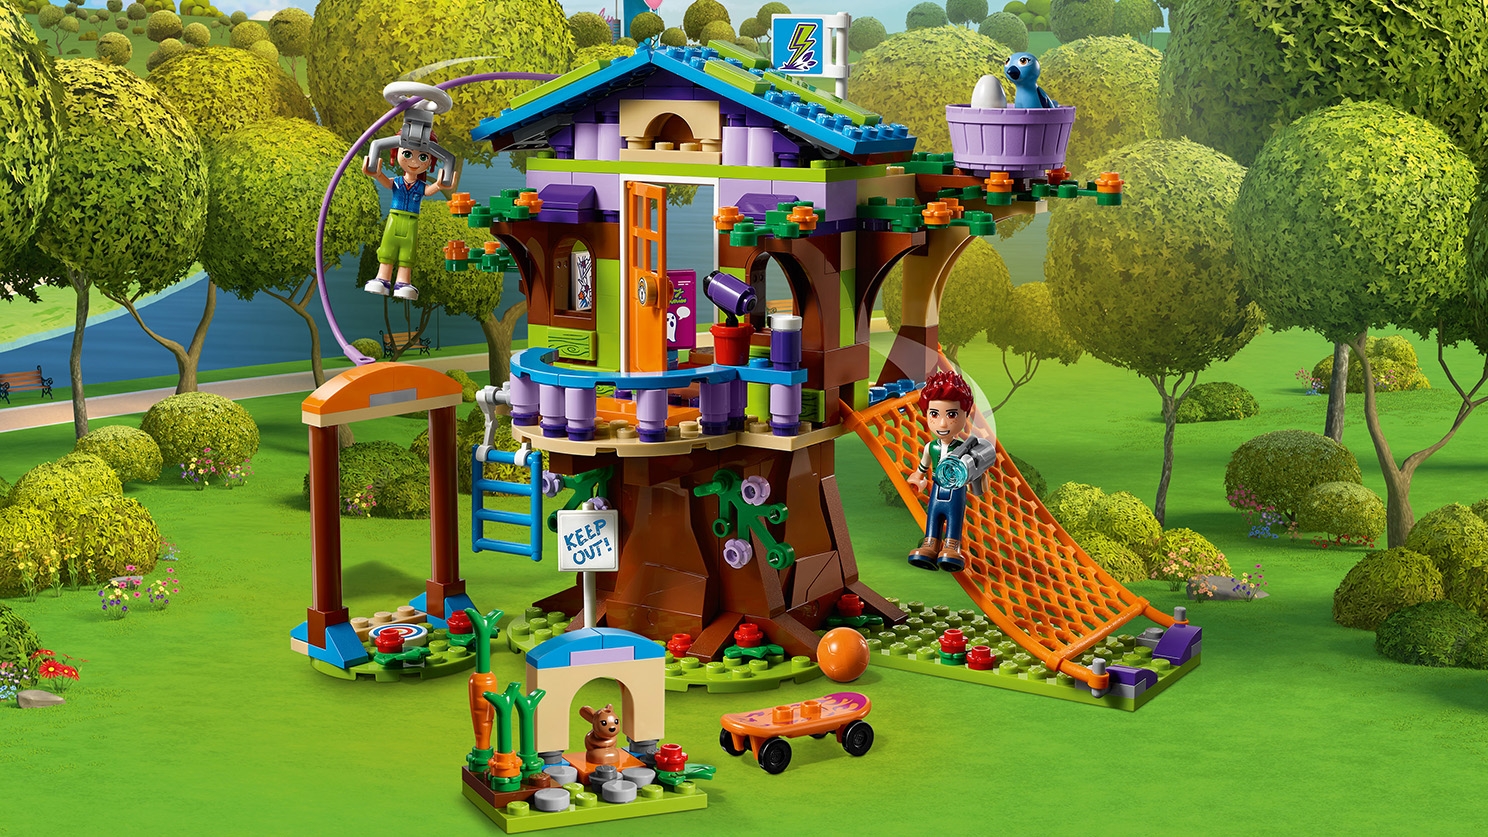 Lego Friends Mia's Tree House Kit 41335 351pcs for sale online